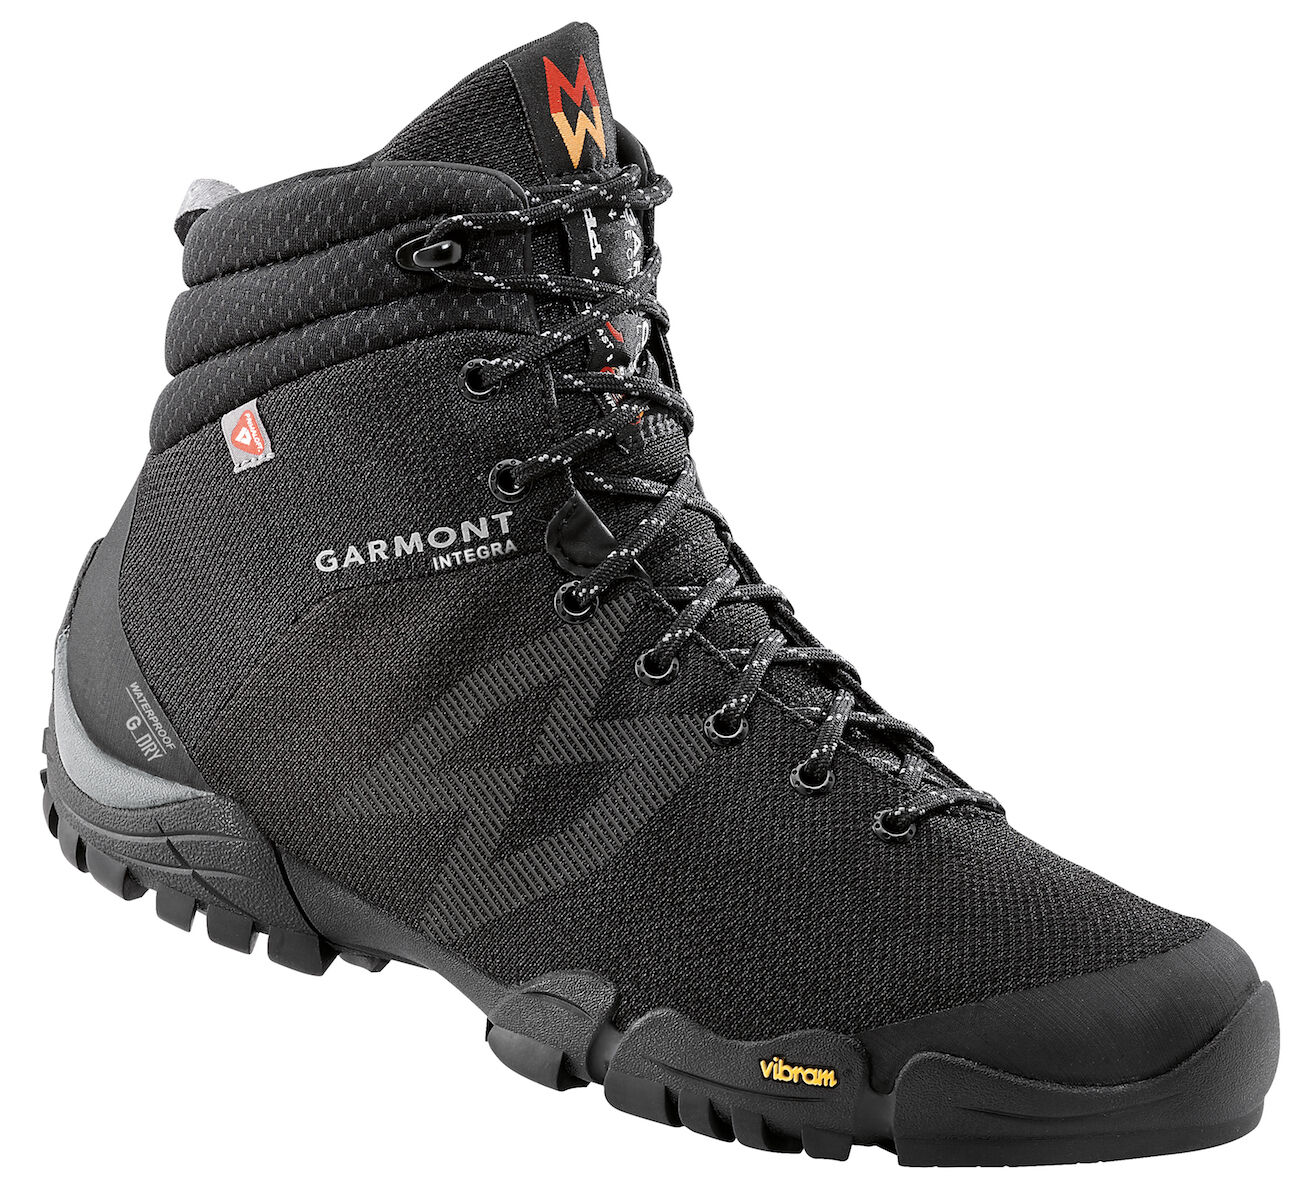 Garmont Integra High WP Thermal - Walking boots - Men's